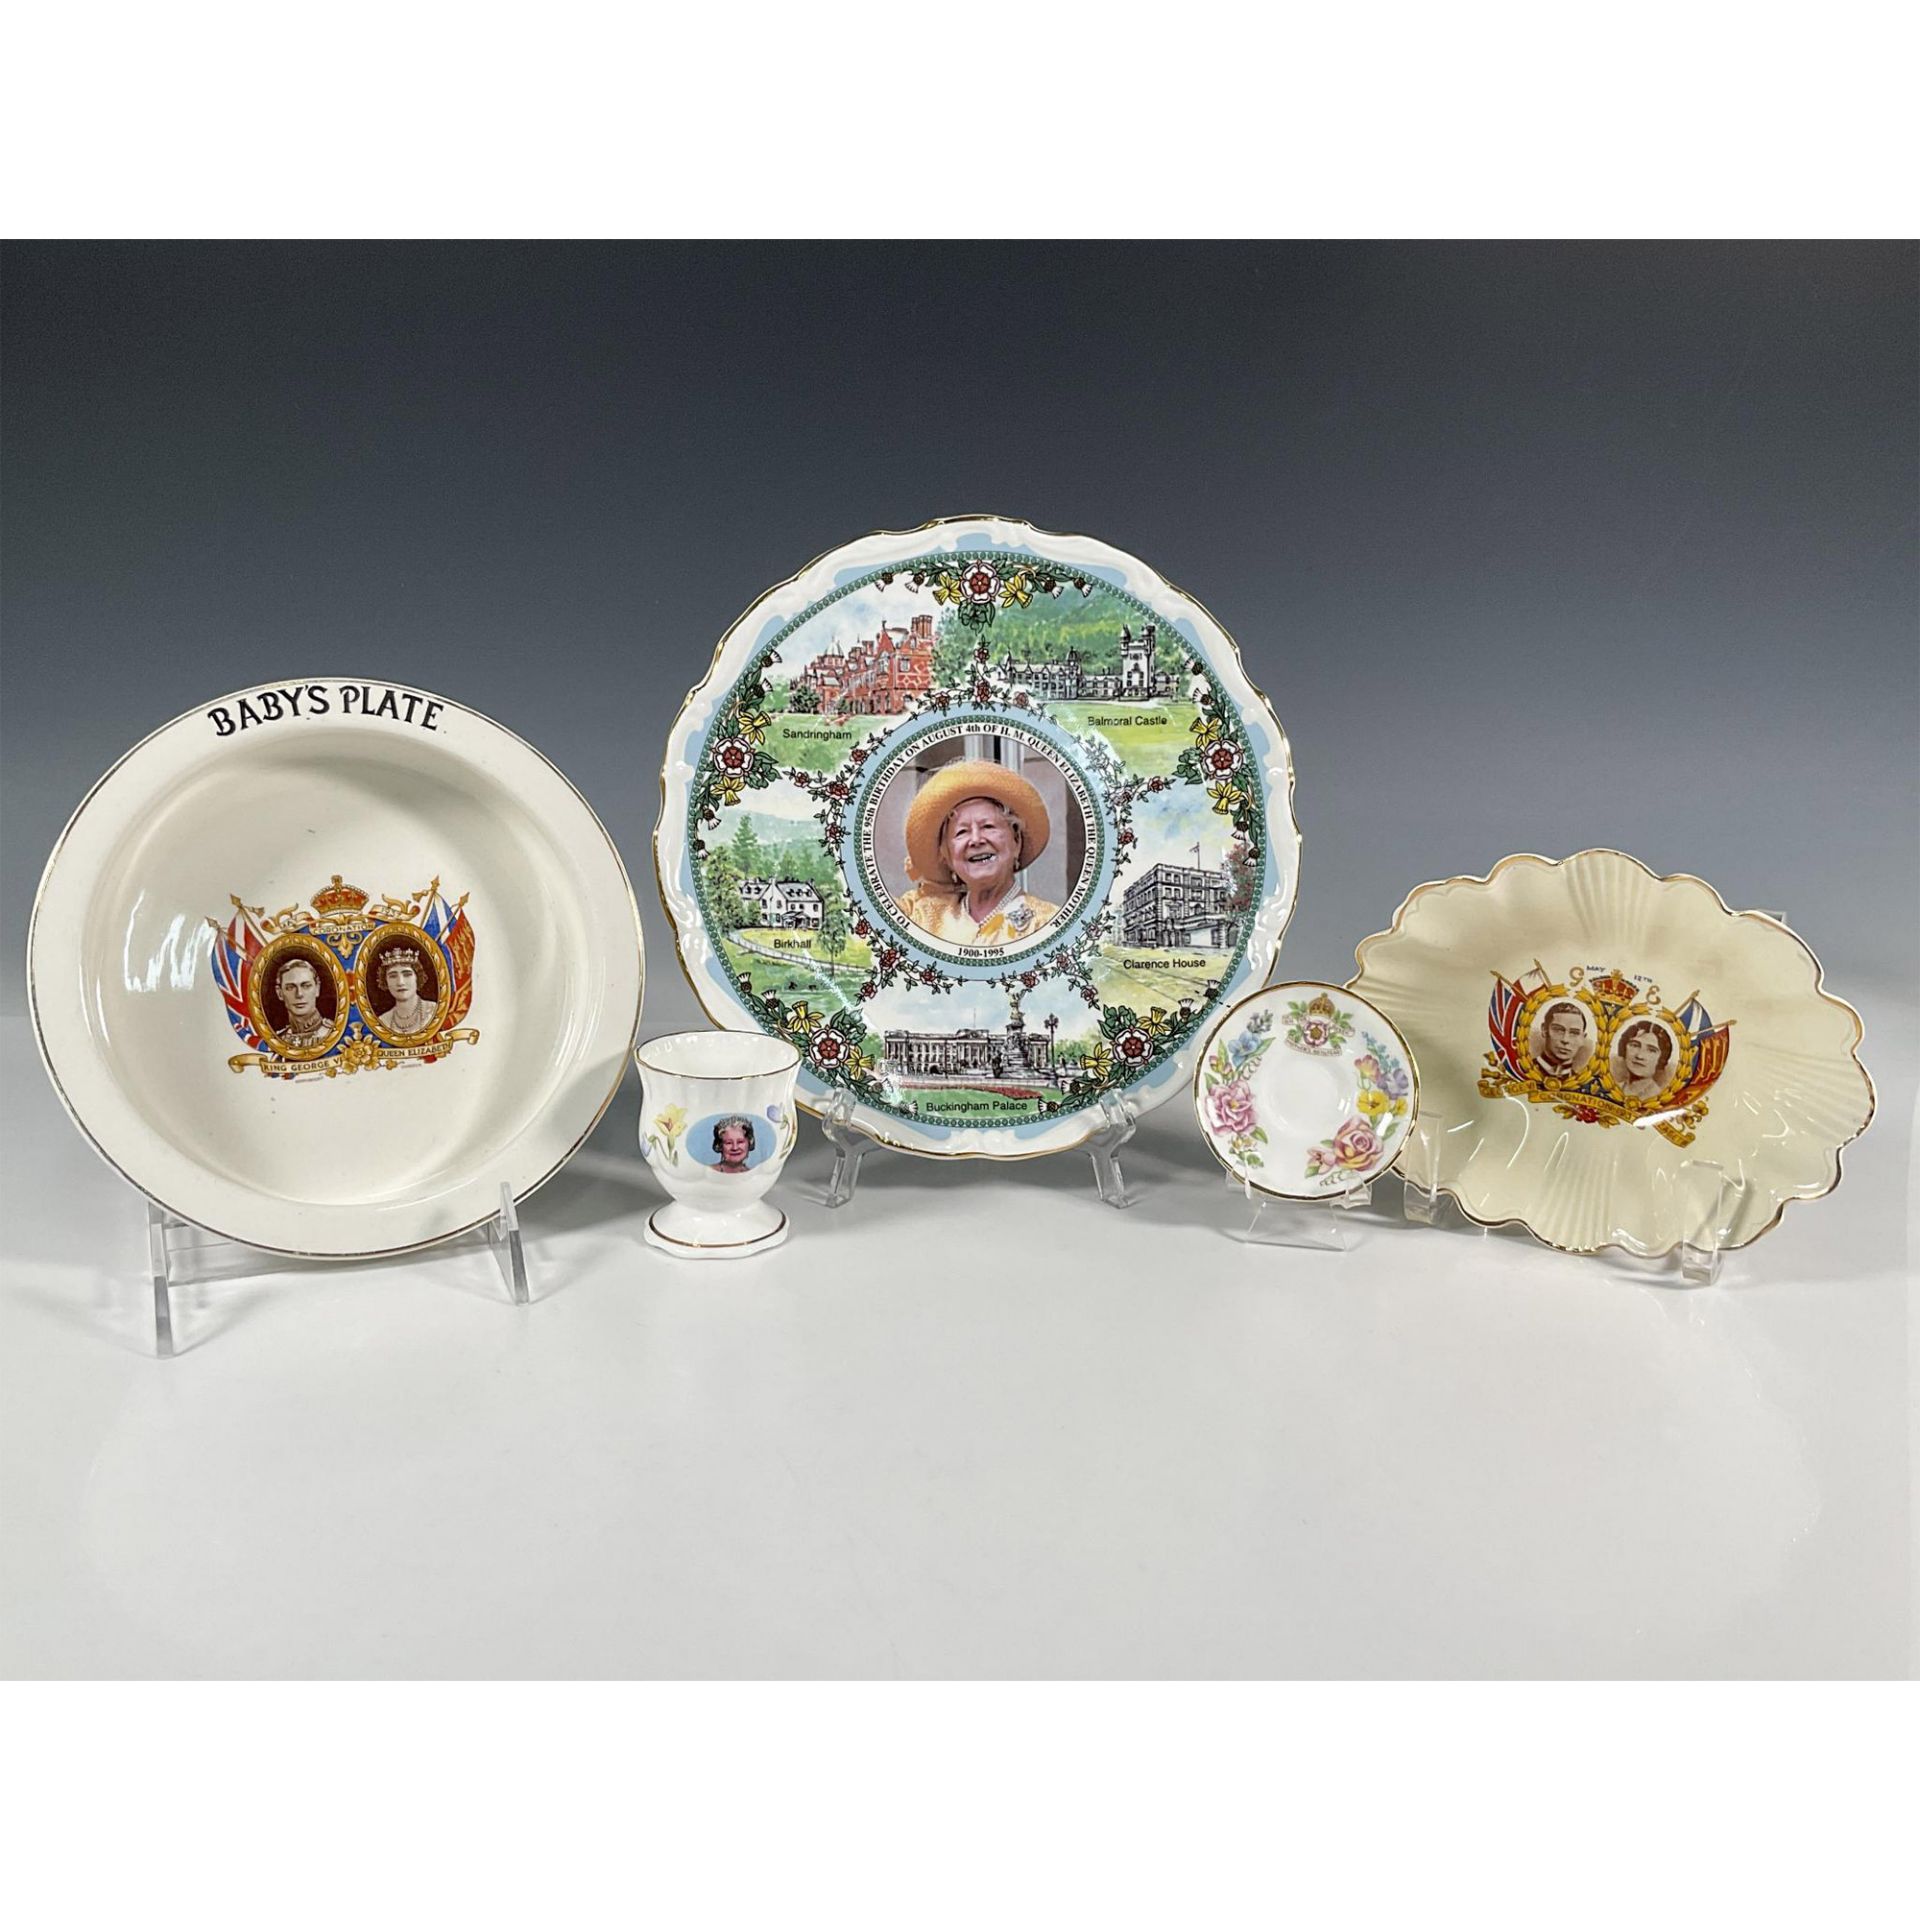 5pc Royal Commemorative Plates/Bowl/Dish, Queen Elizabeth I